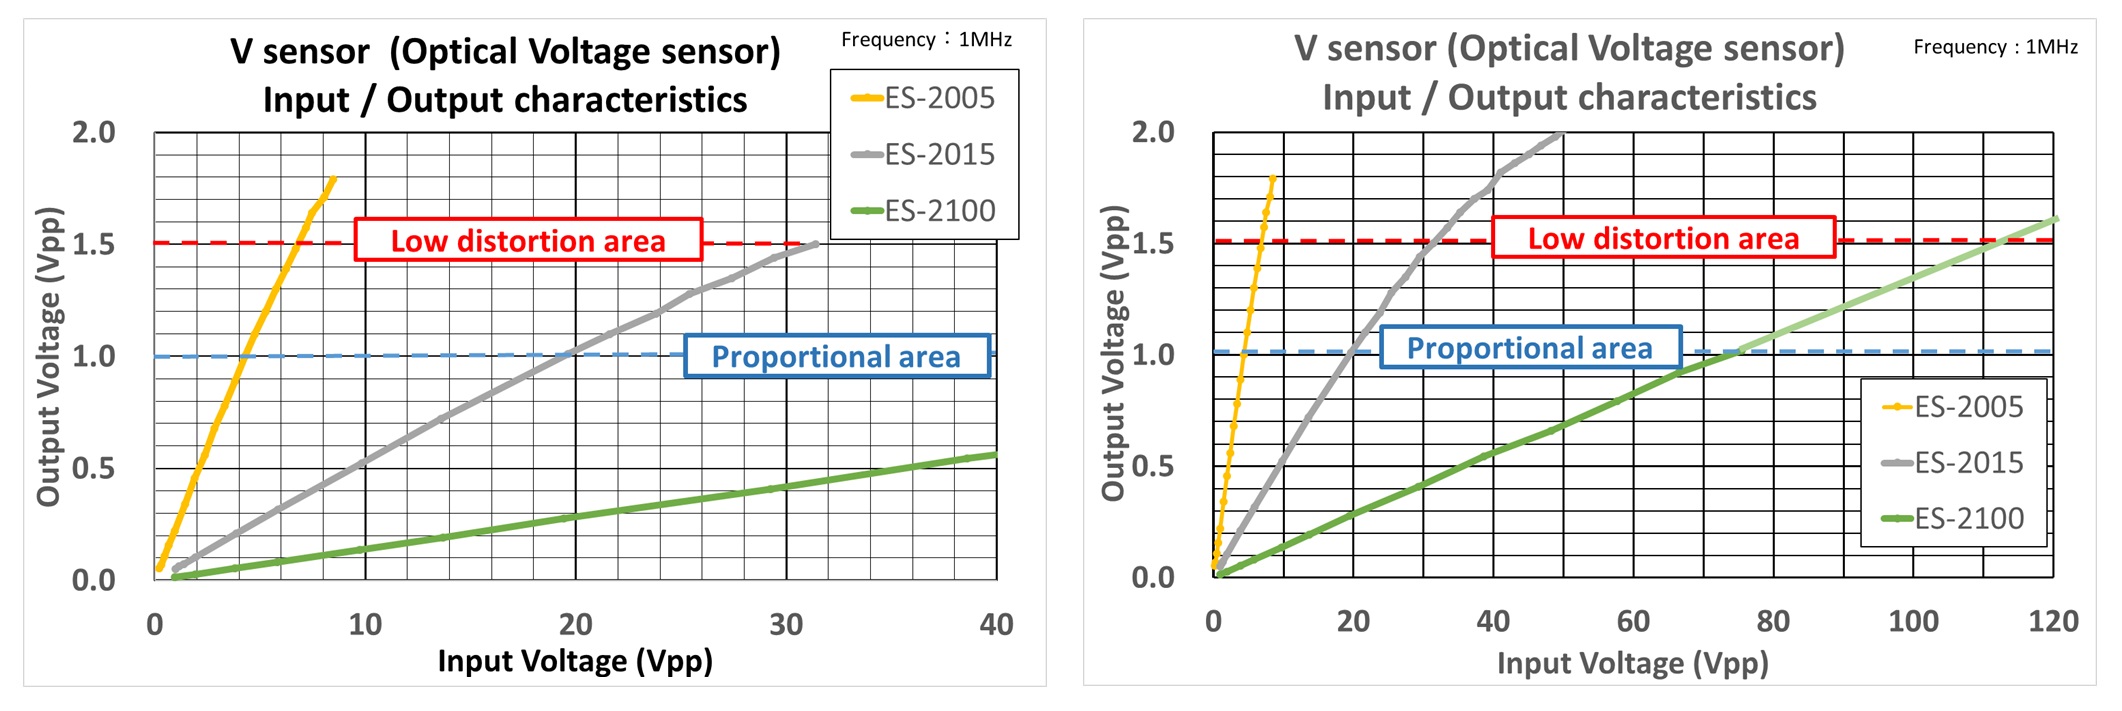 V sensor Input / Output characteristics